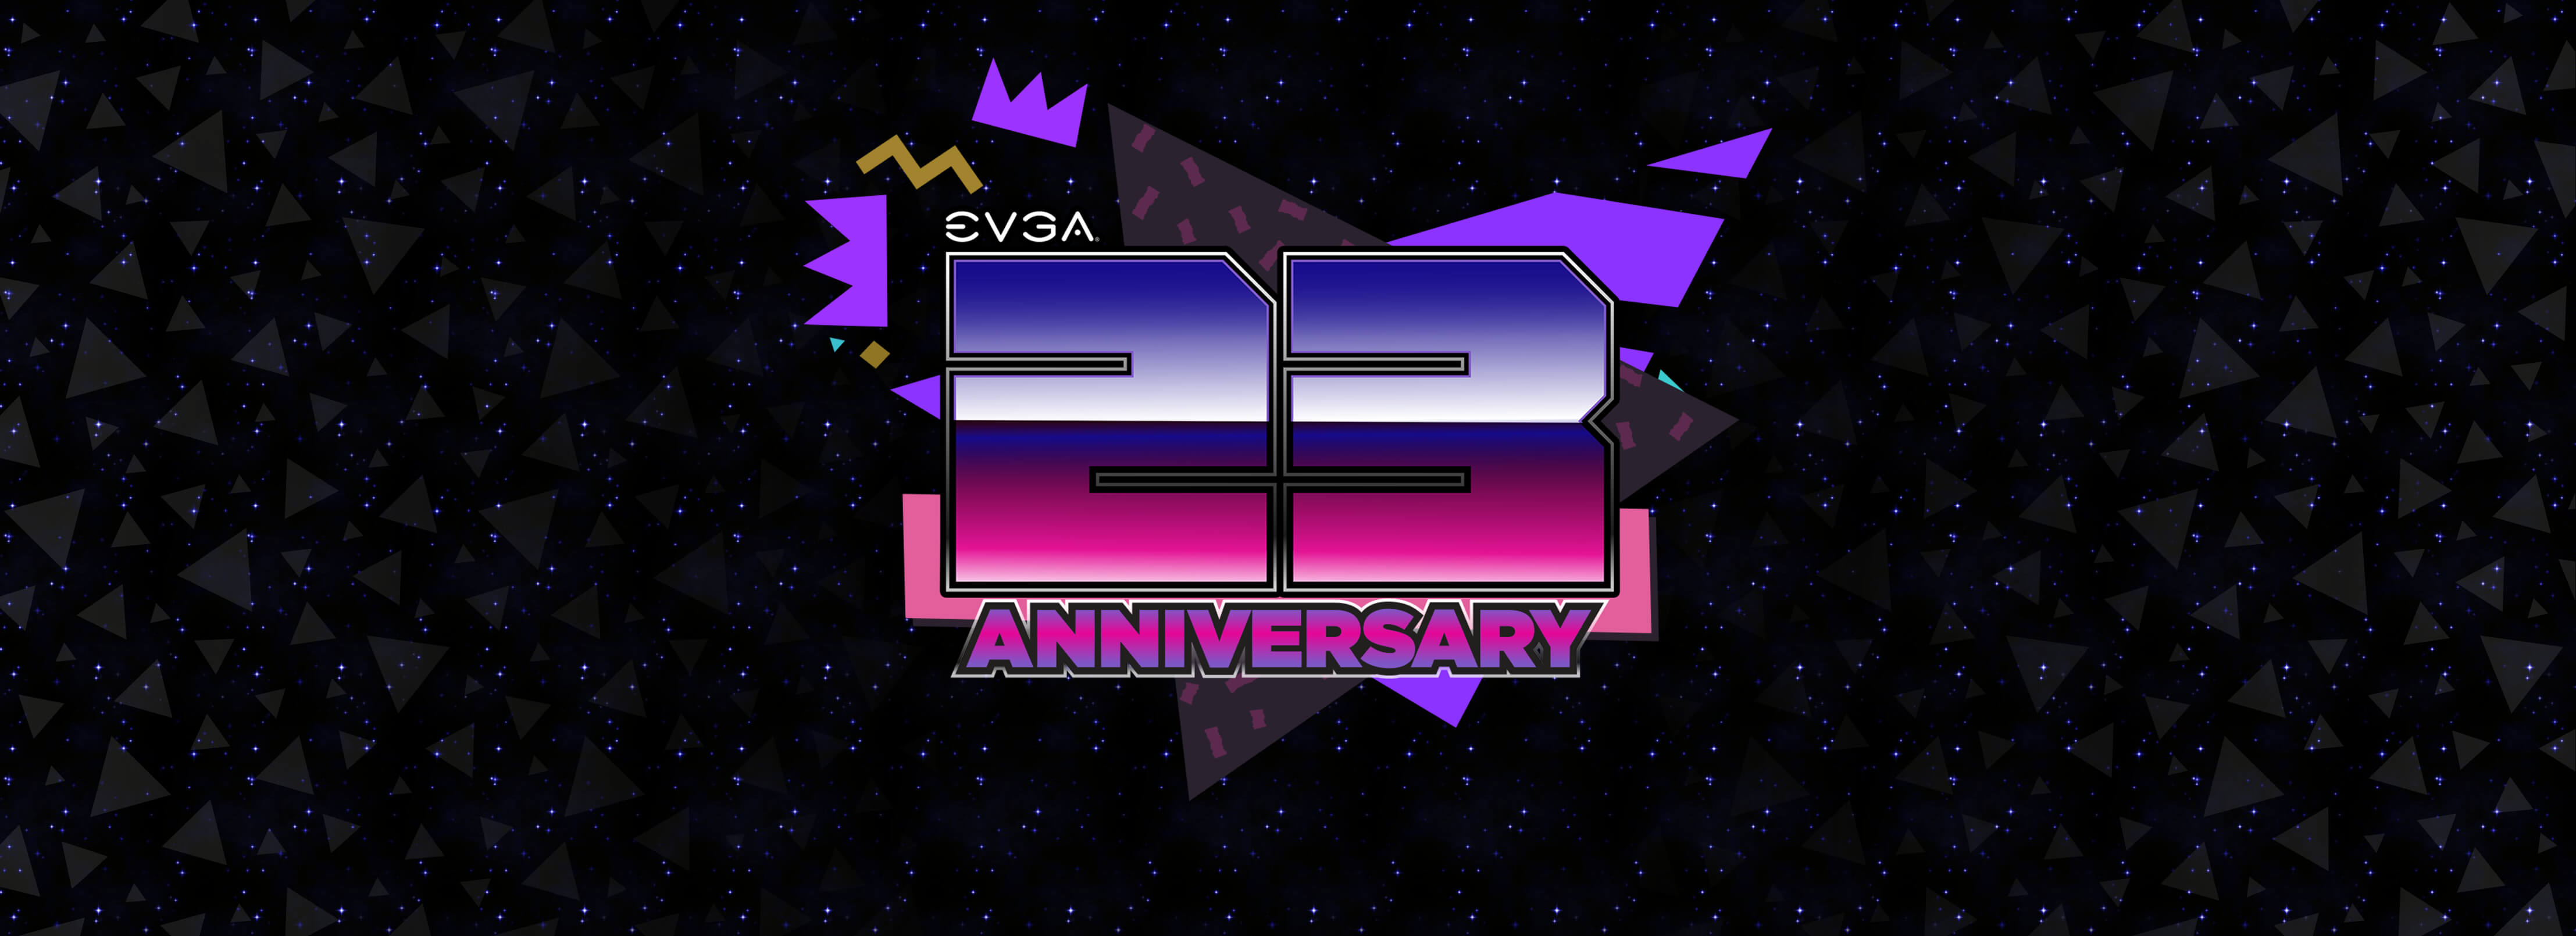 EVGA 23rd Anniversary - Social Media Event